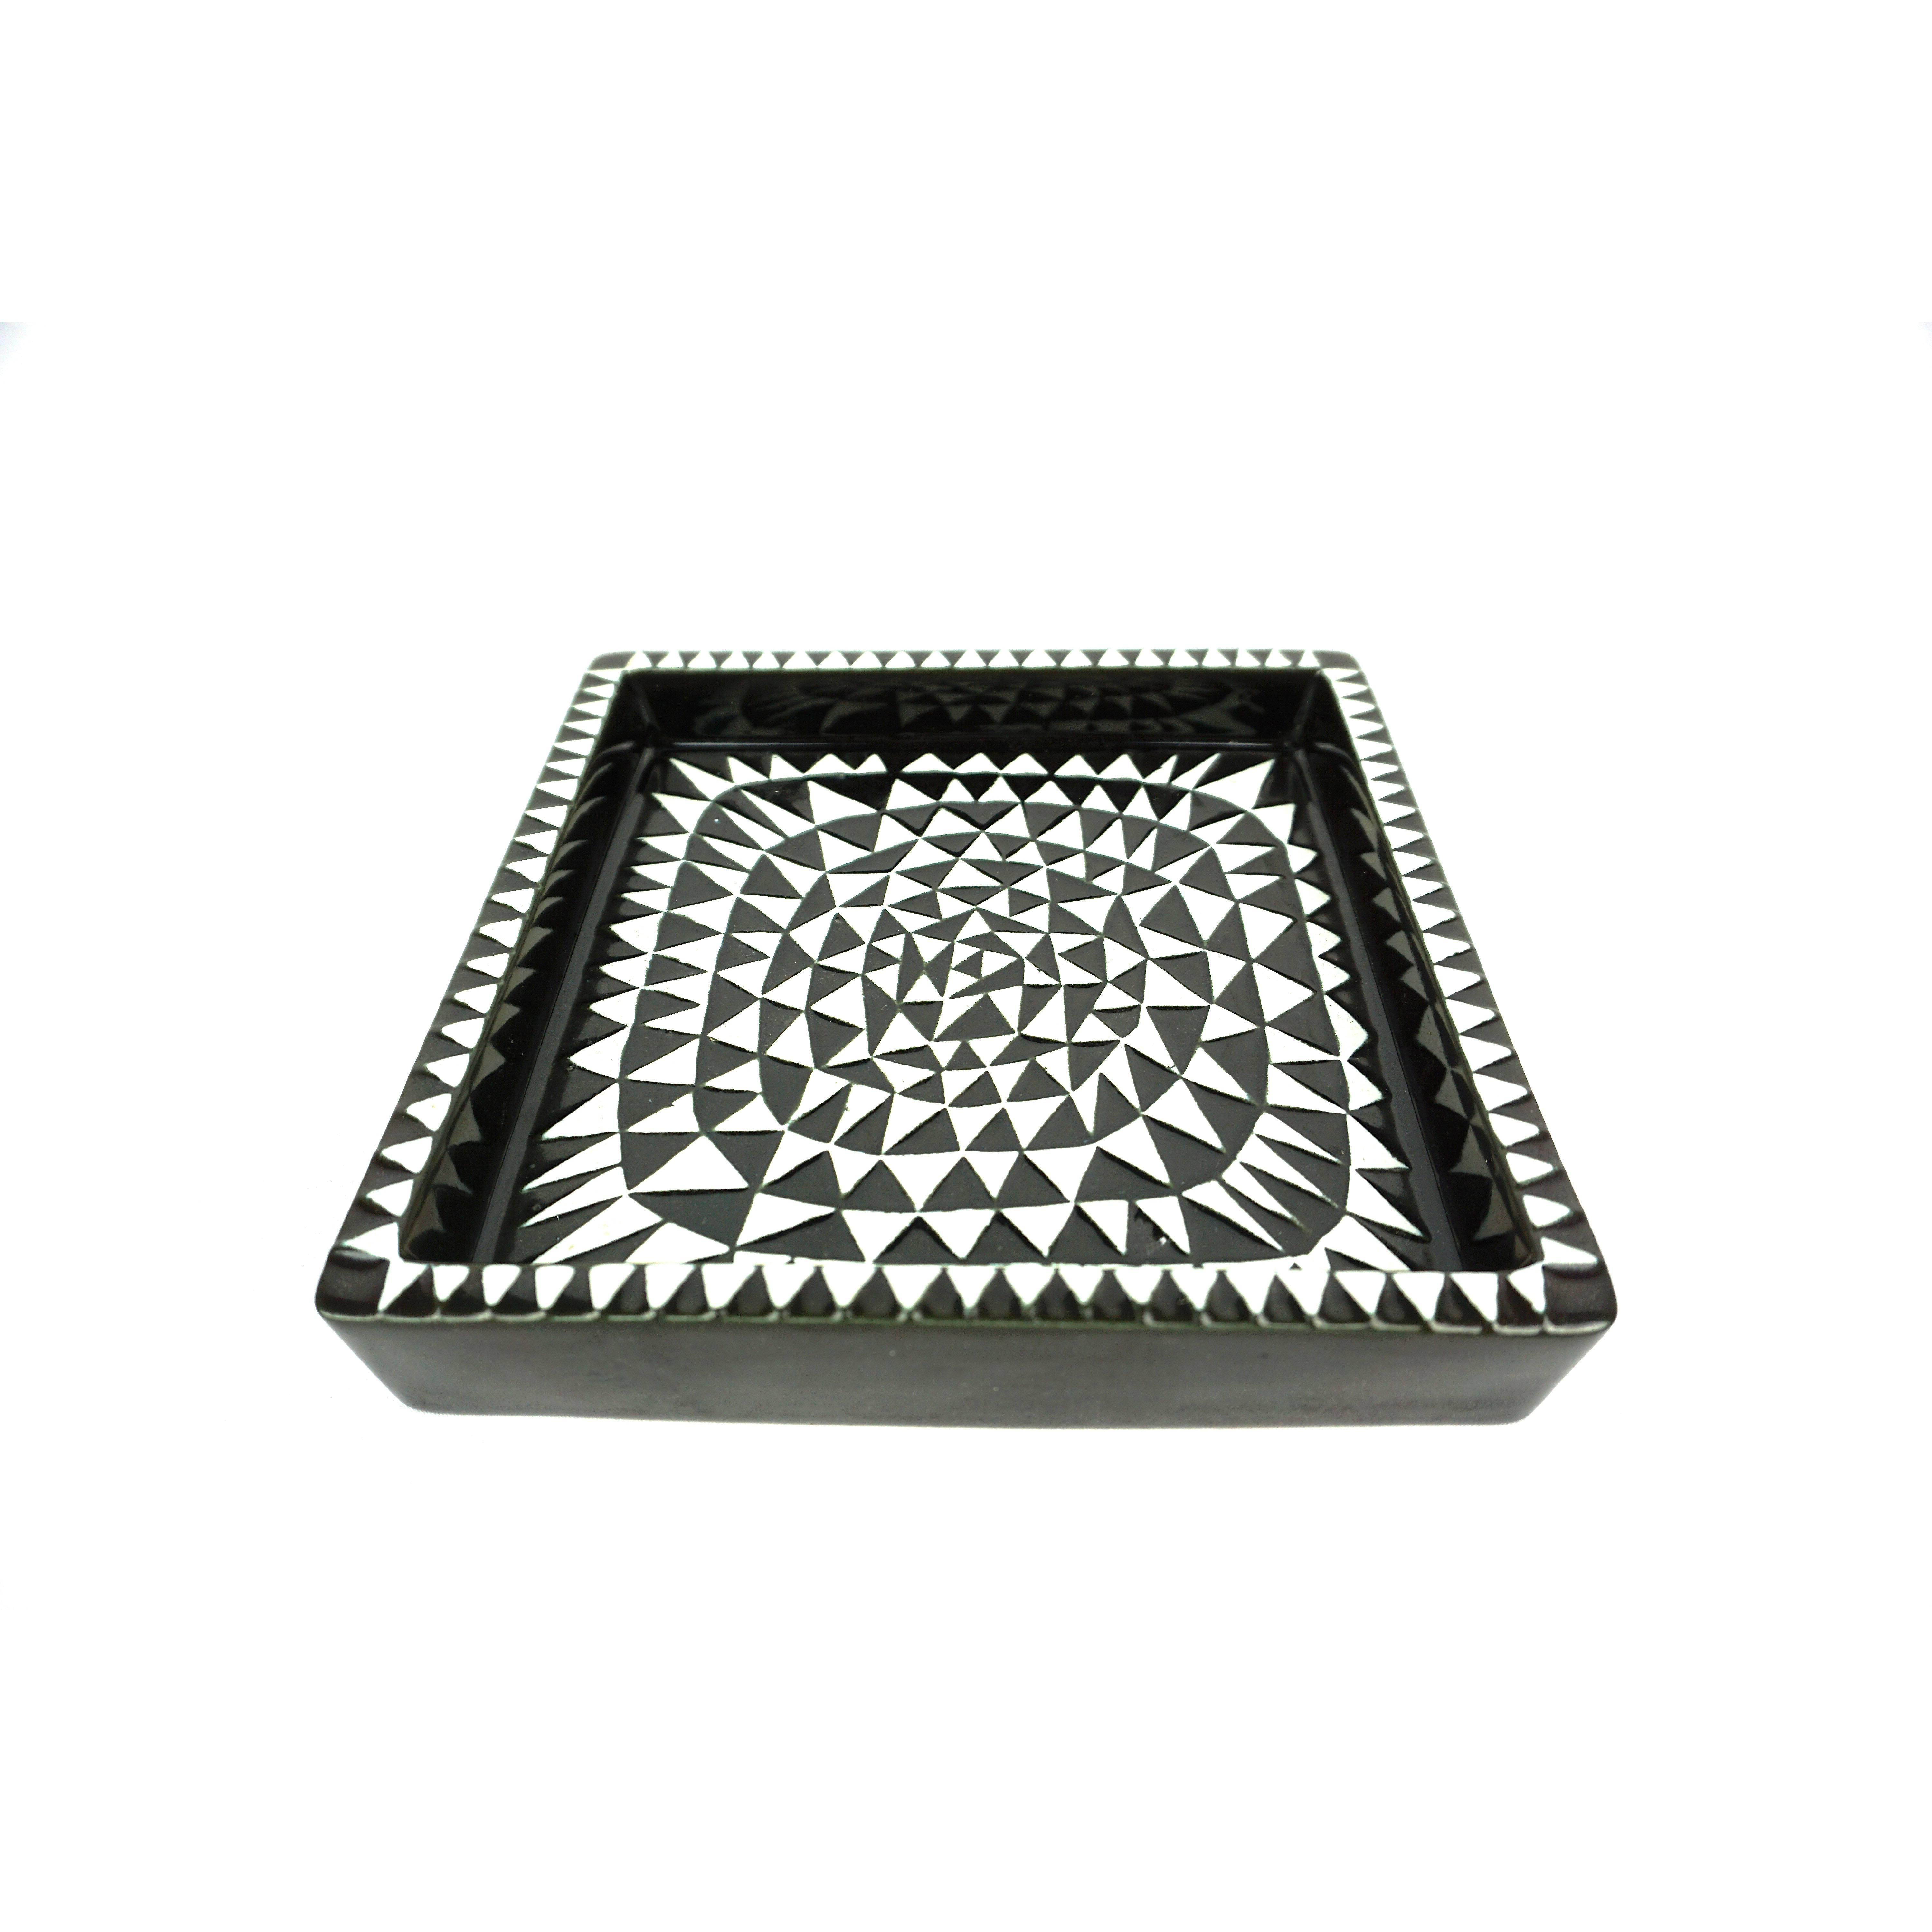 Ceramic tray model Domino designed by Stig Lindberg, produced by Gustavsberg in Sweden. 
Dimensions: W 20 x D 20 x H 3.5 cm.
 